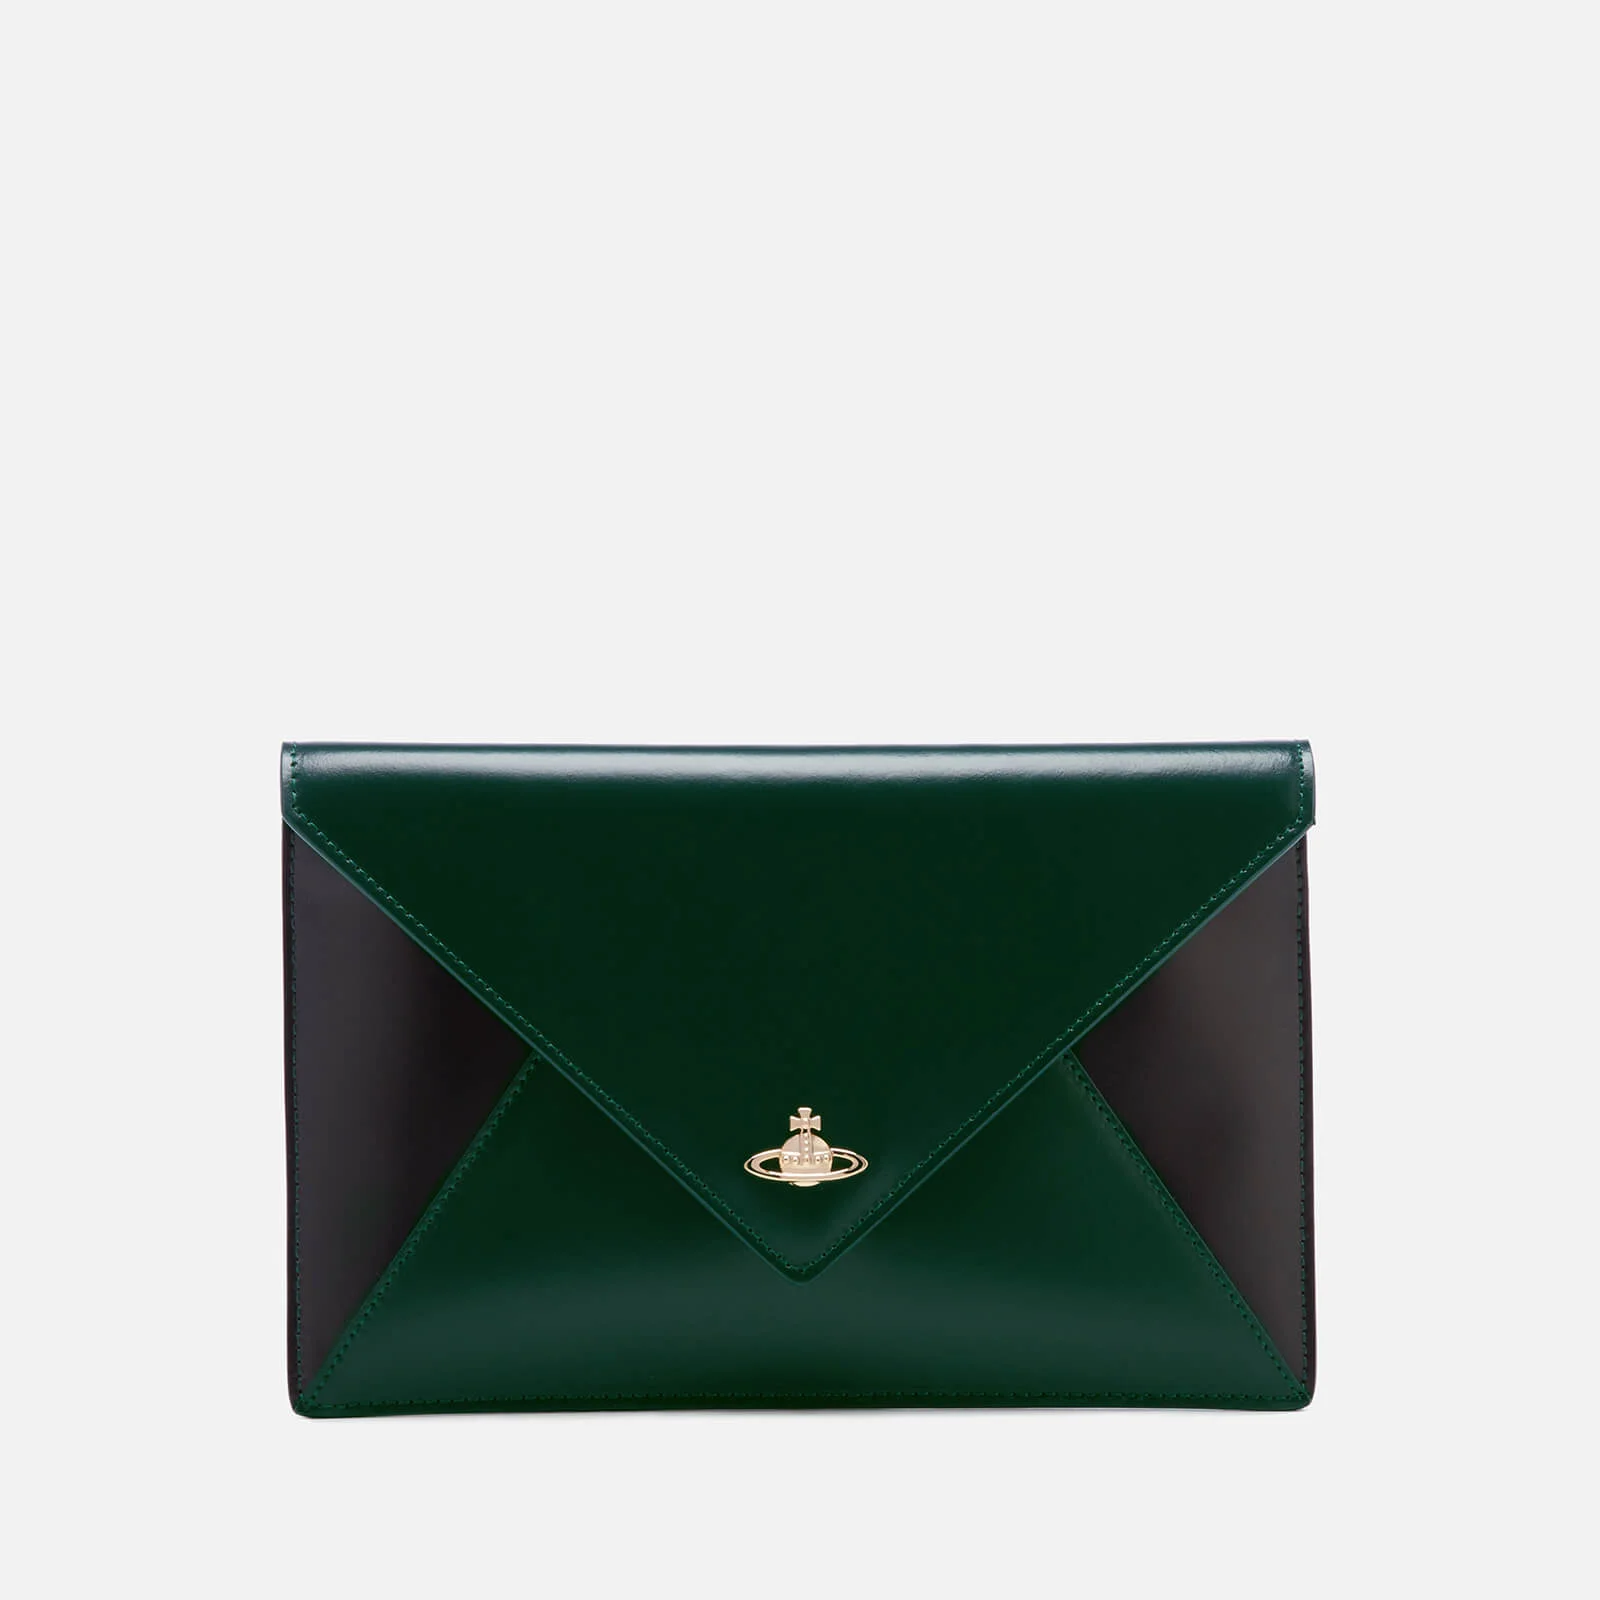 Vivienne Westwood Women's Private Envelope Clutch Bag - Green/Black Image 1